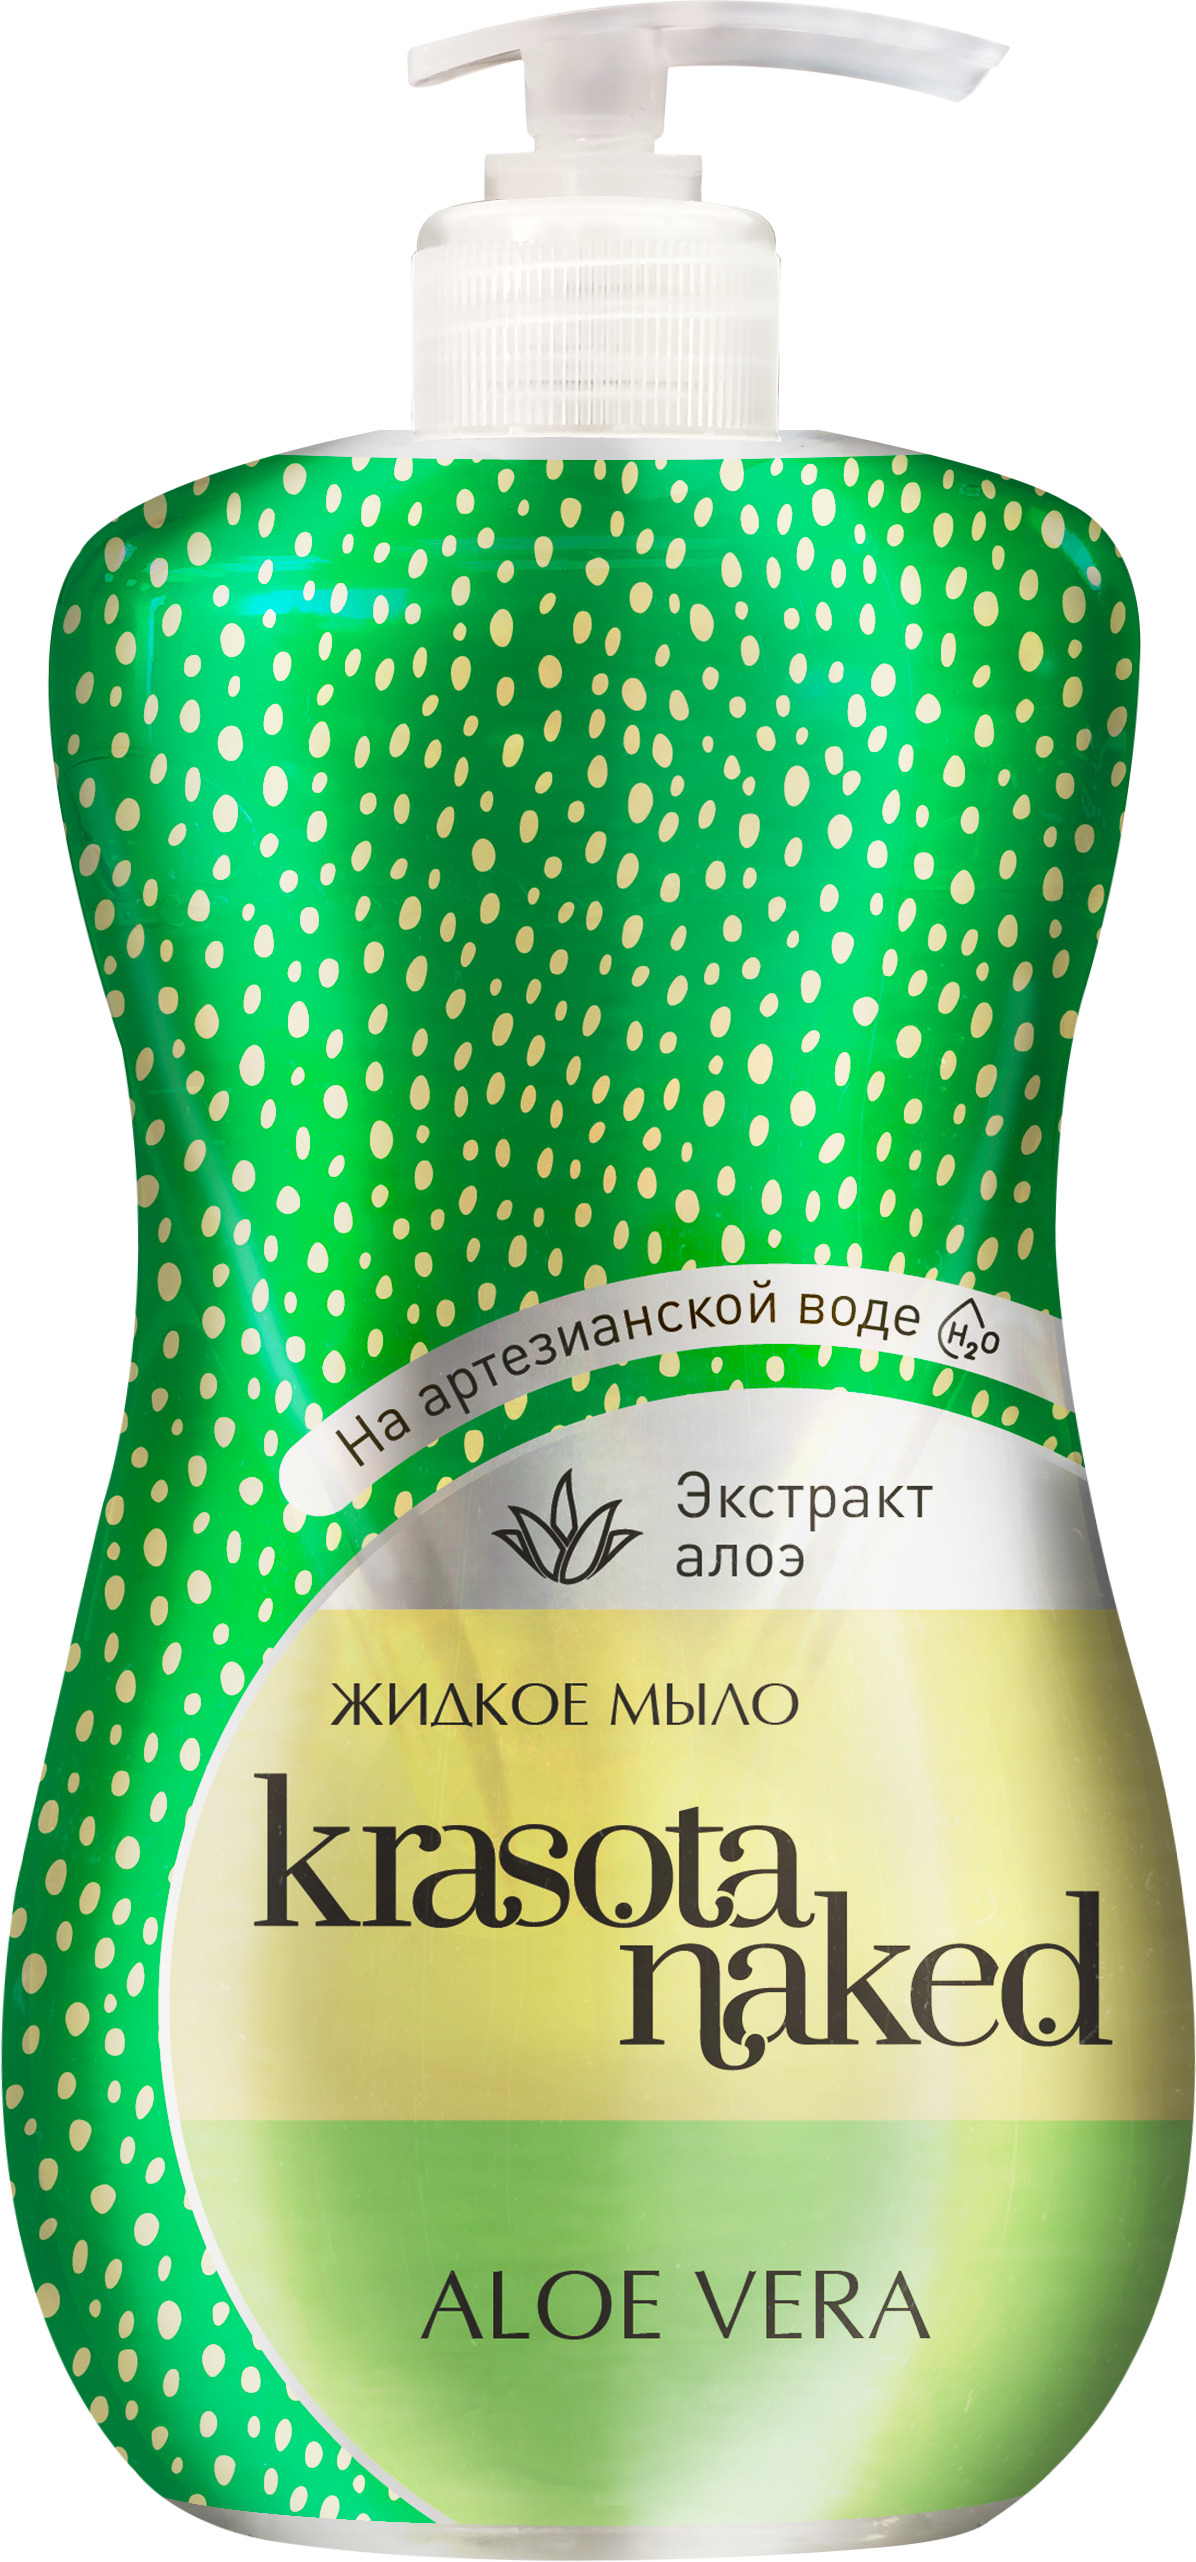 Жидкое Мыло Krasota Naked, Aloe vera, 500 мл